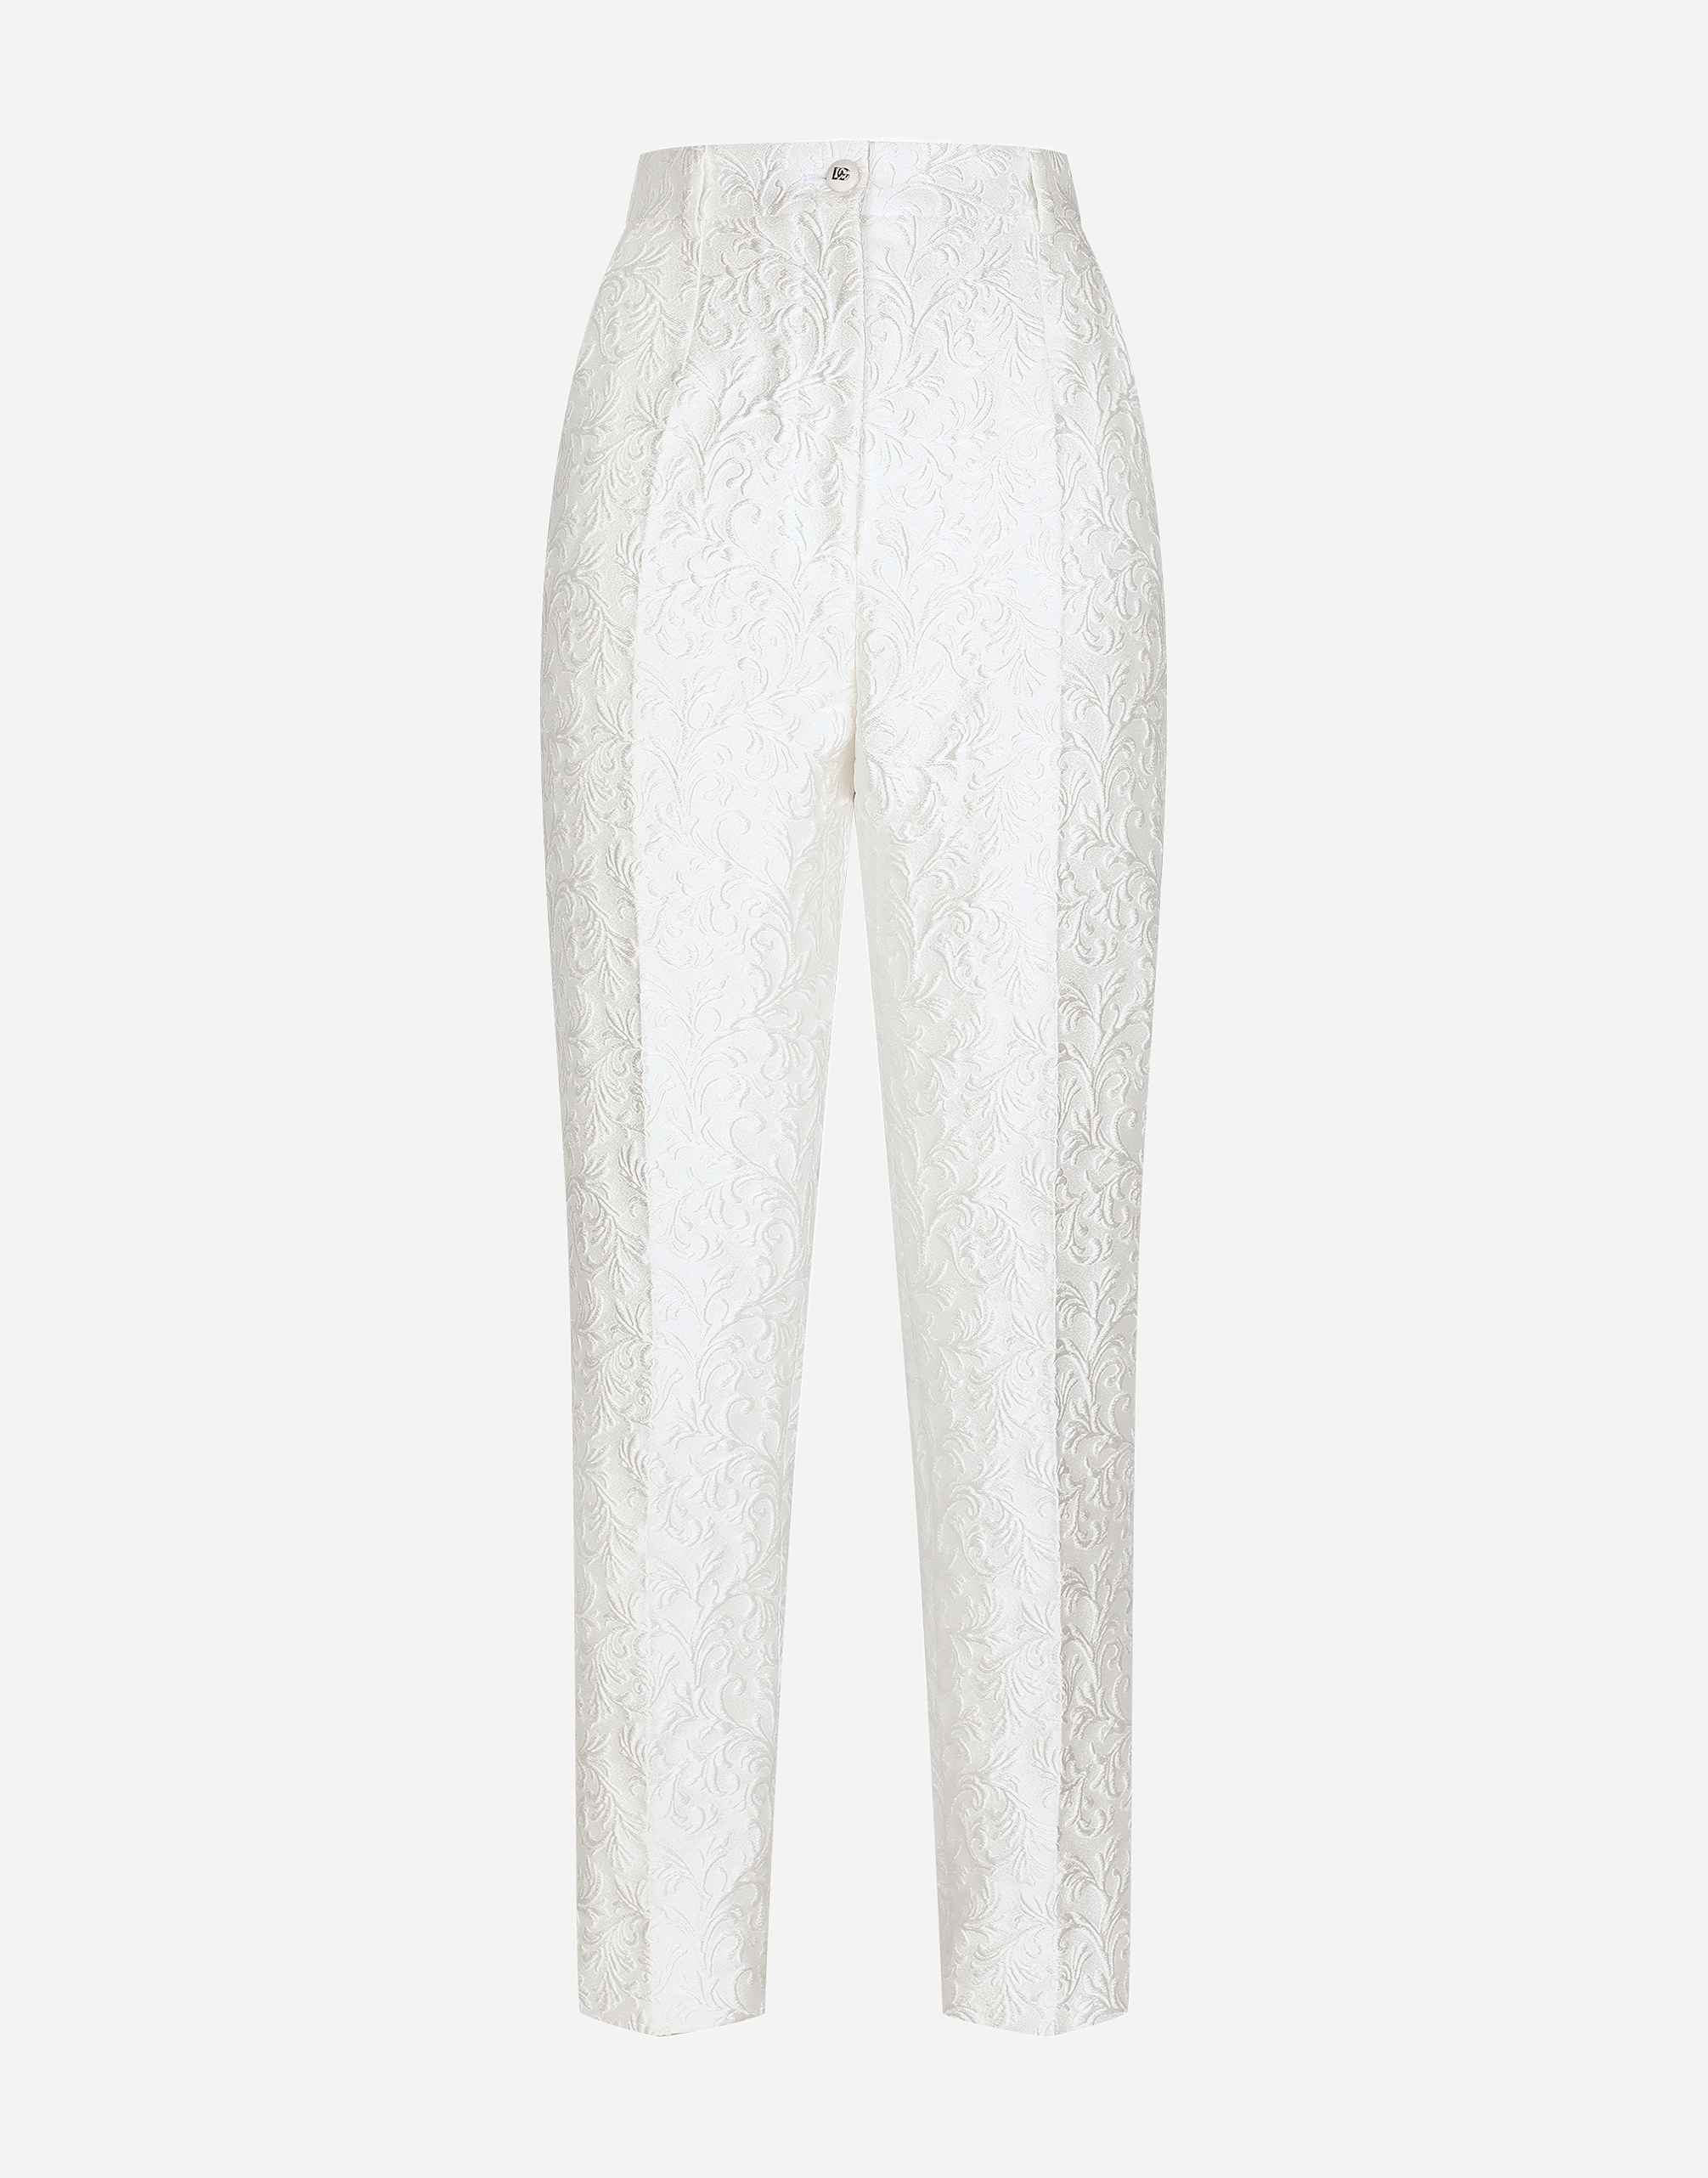 Dolce & Gabbana Brocade Pants In White